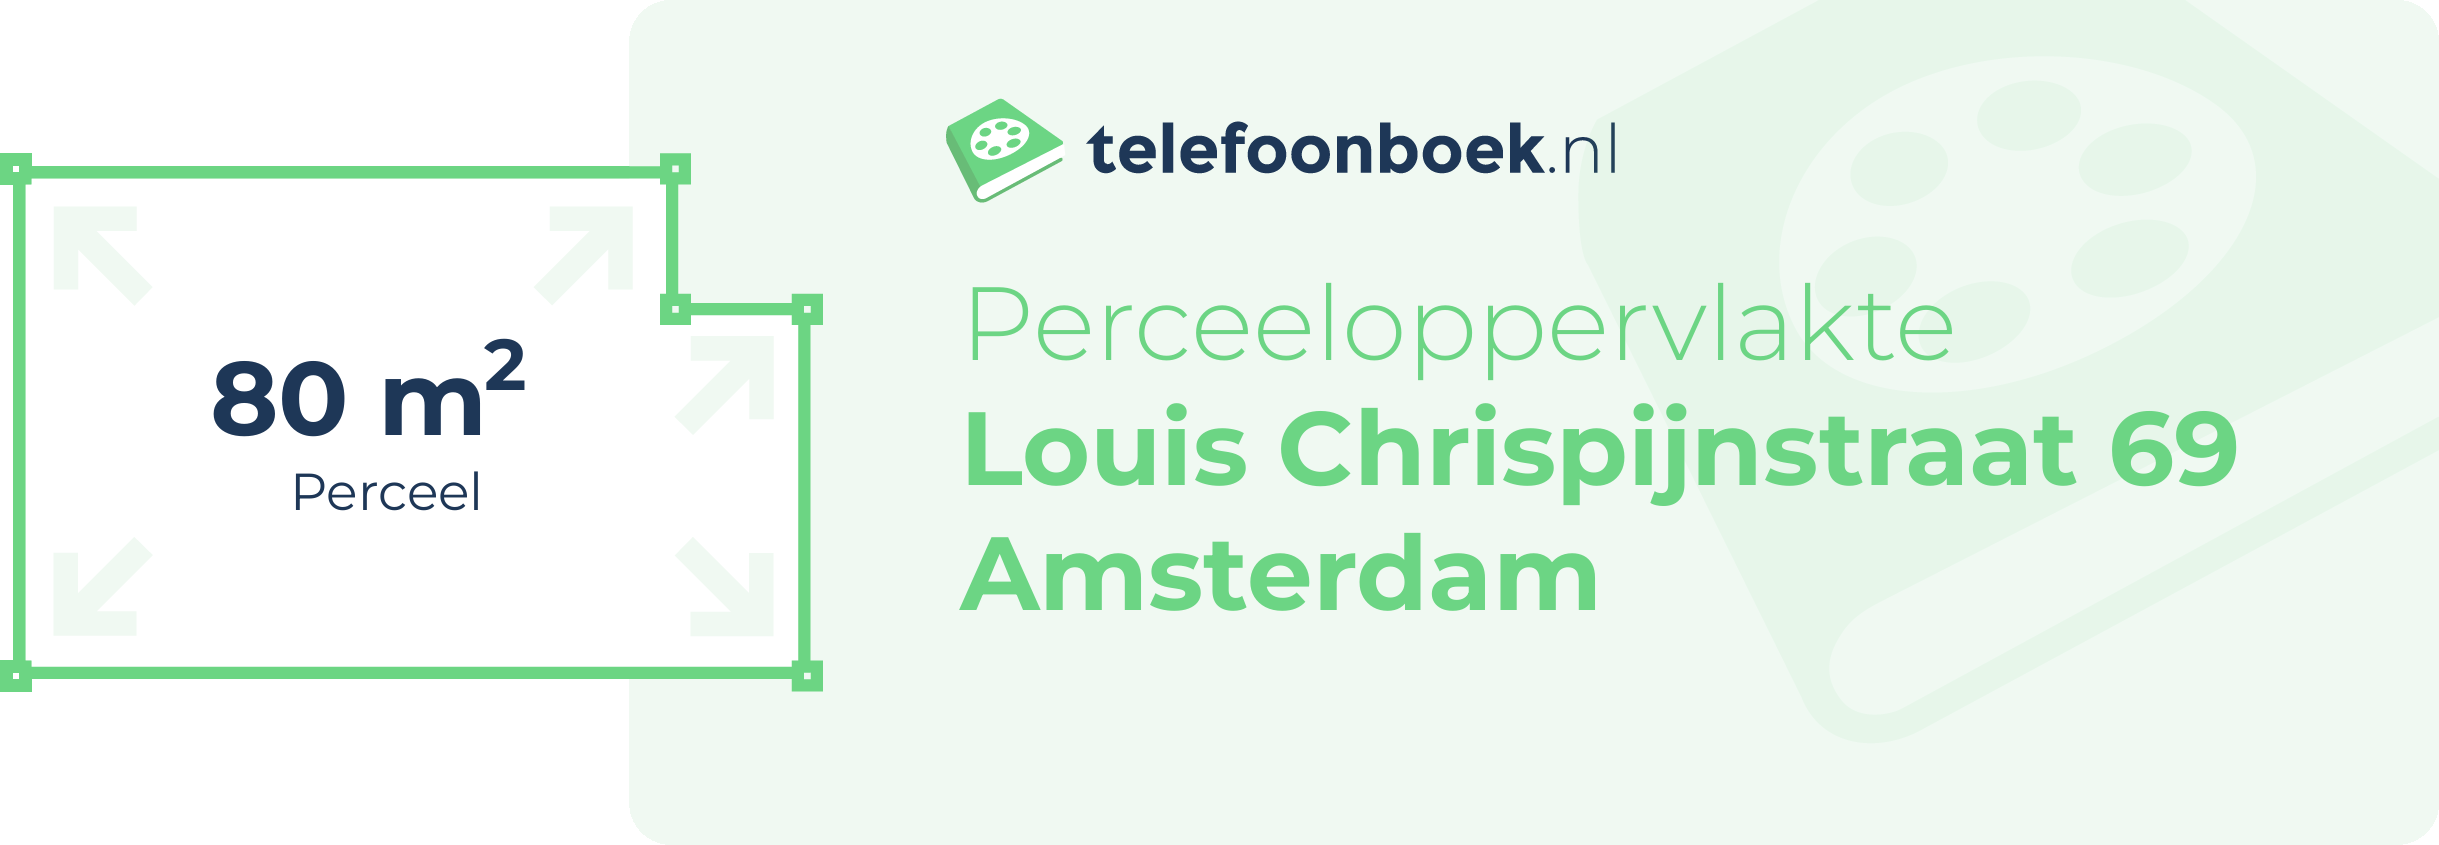 Perceeloppervlakte Louis Chrispijnstraat 69 Amsterdam